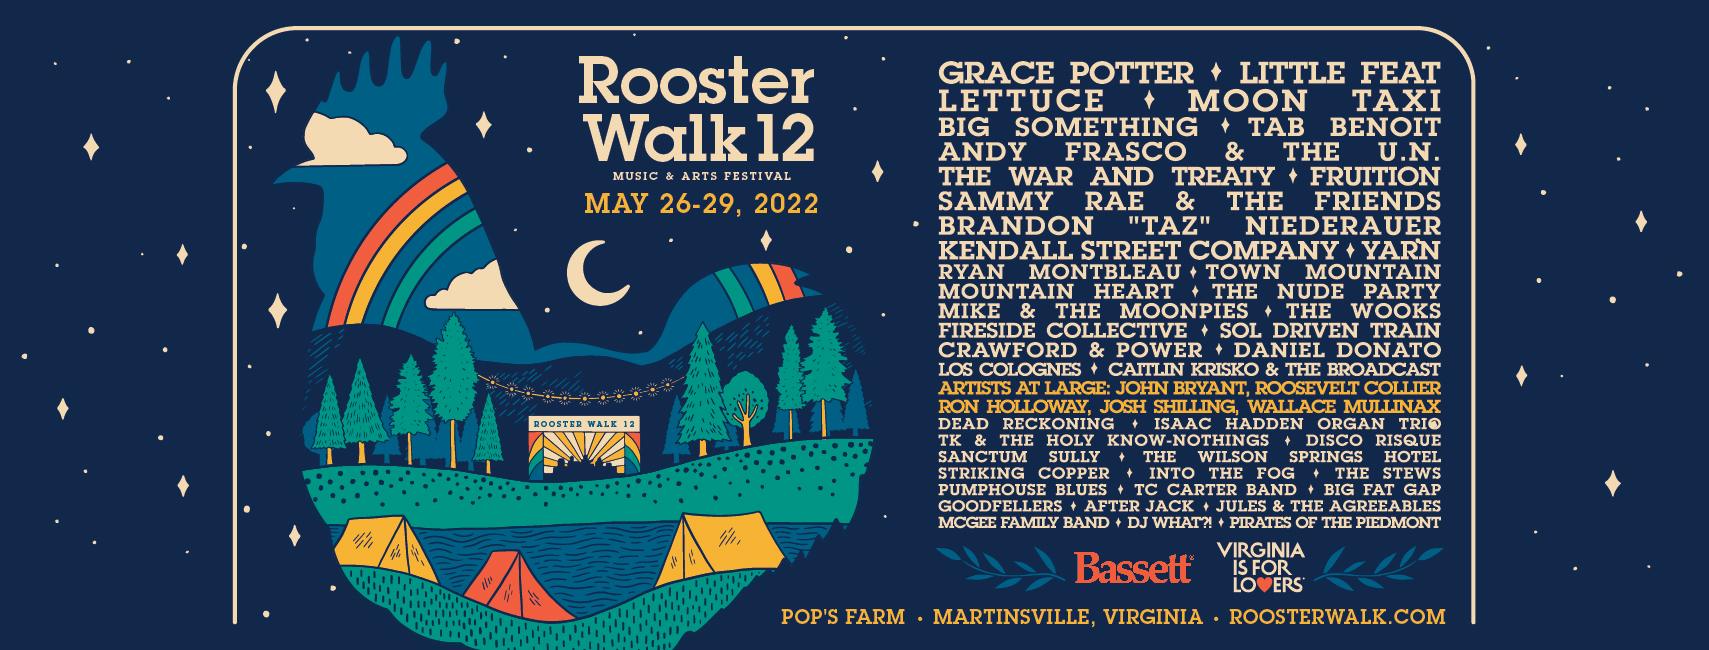 Rooster Walk 12 Music & Arts Festival banner image